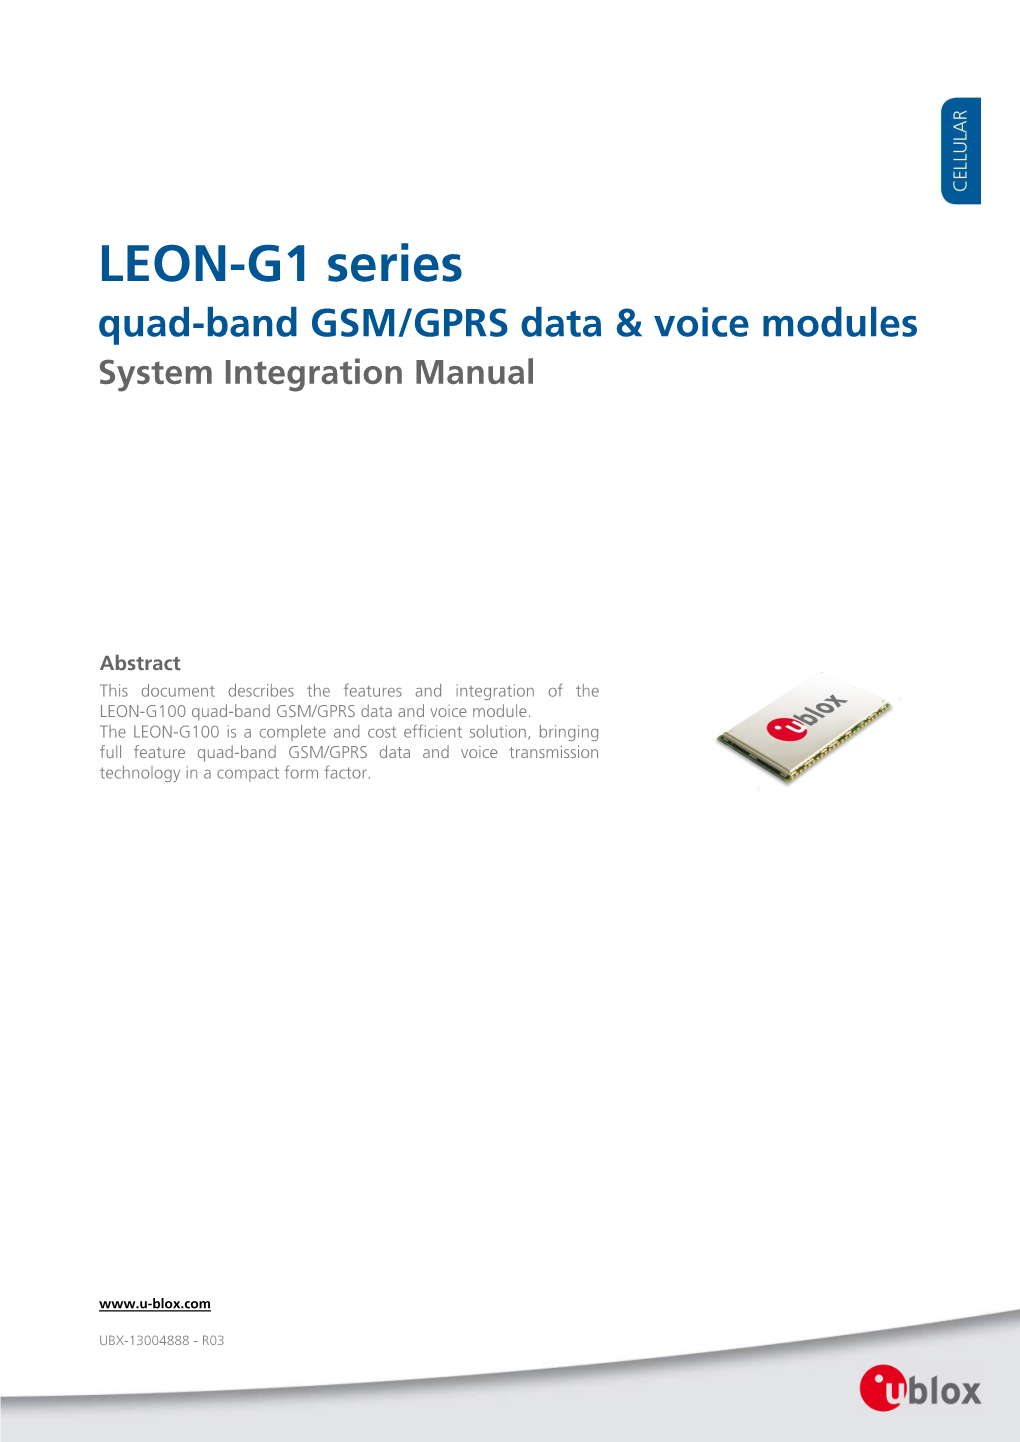 LEON-G1 Series Quad-Band GSM/GPRS Data & Voice Modules System Integration Manual